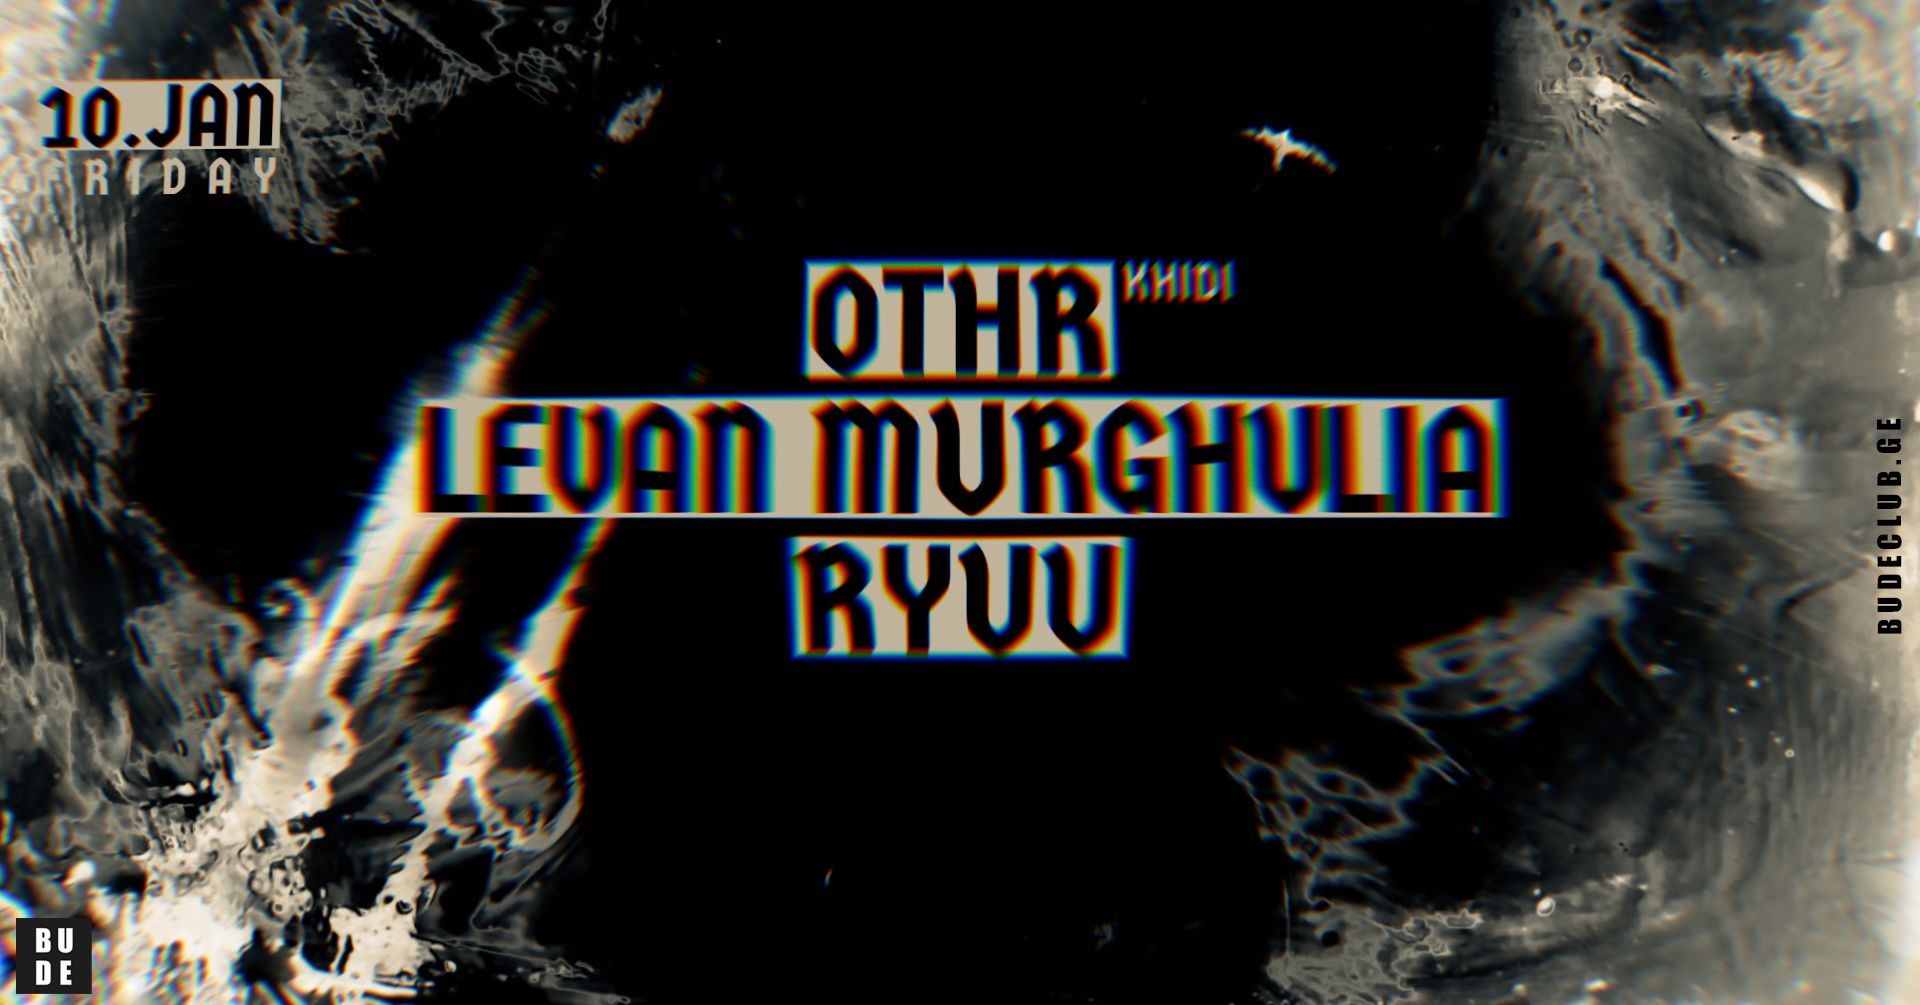 Bude: Othr • Levan Murghulia • Ryuu